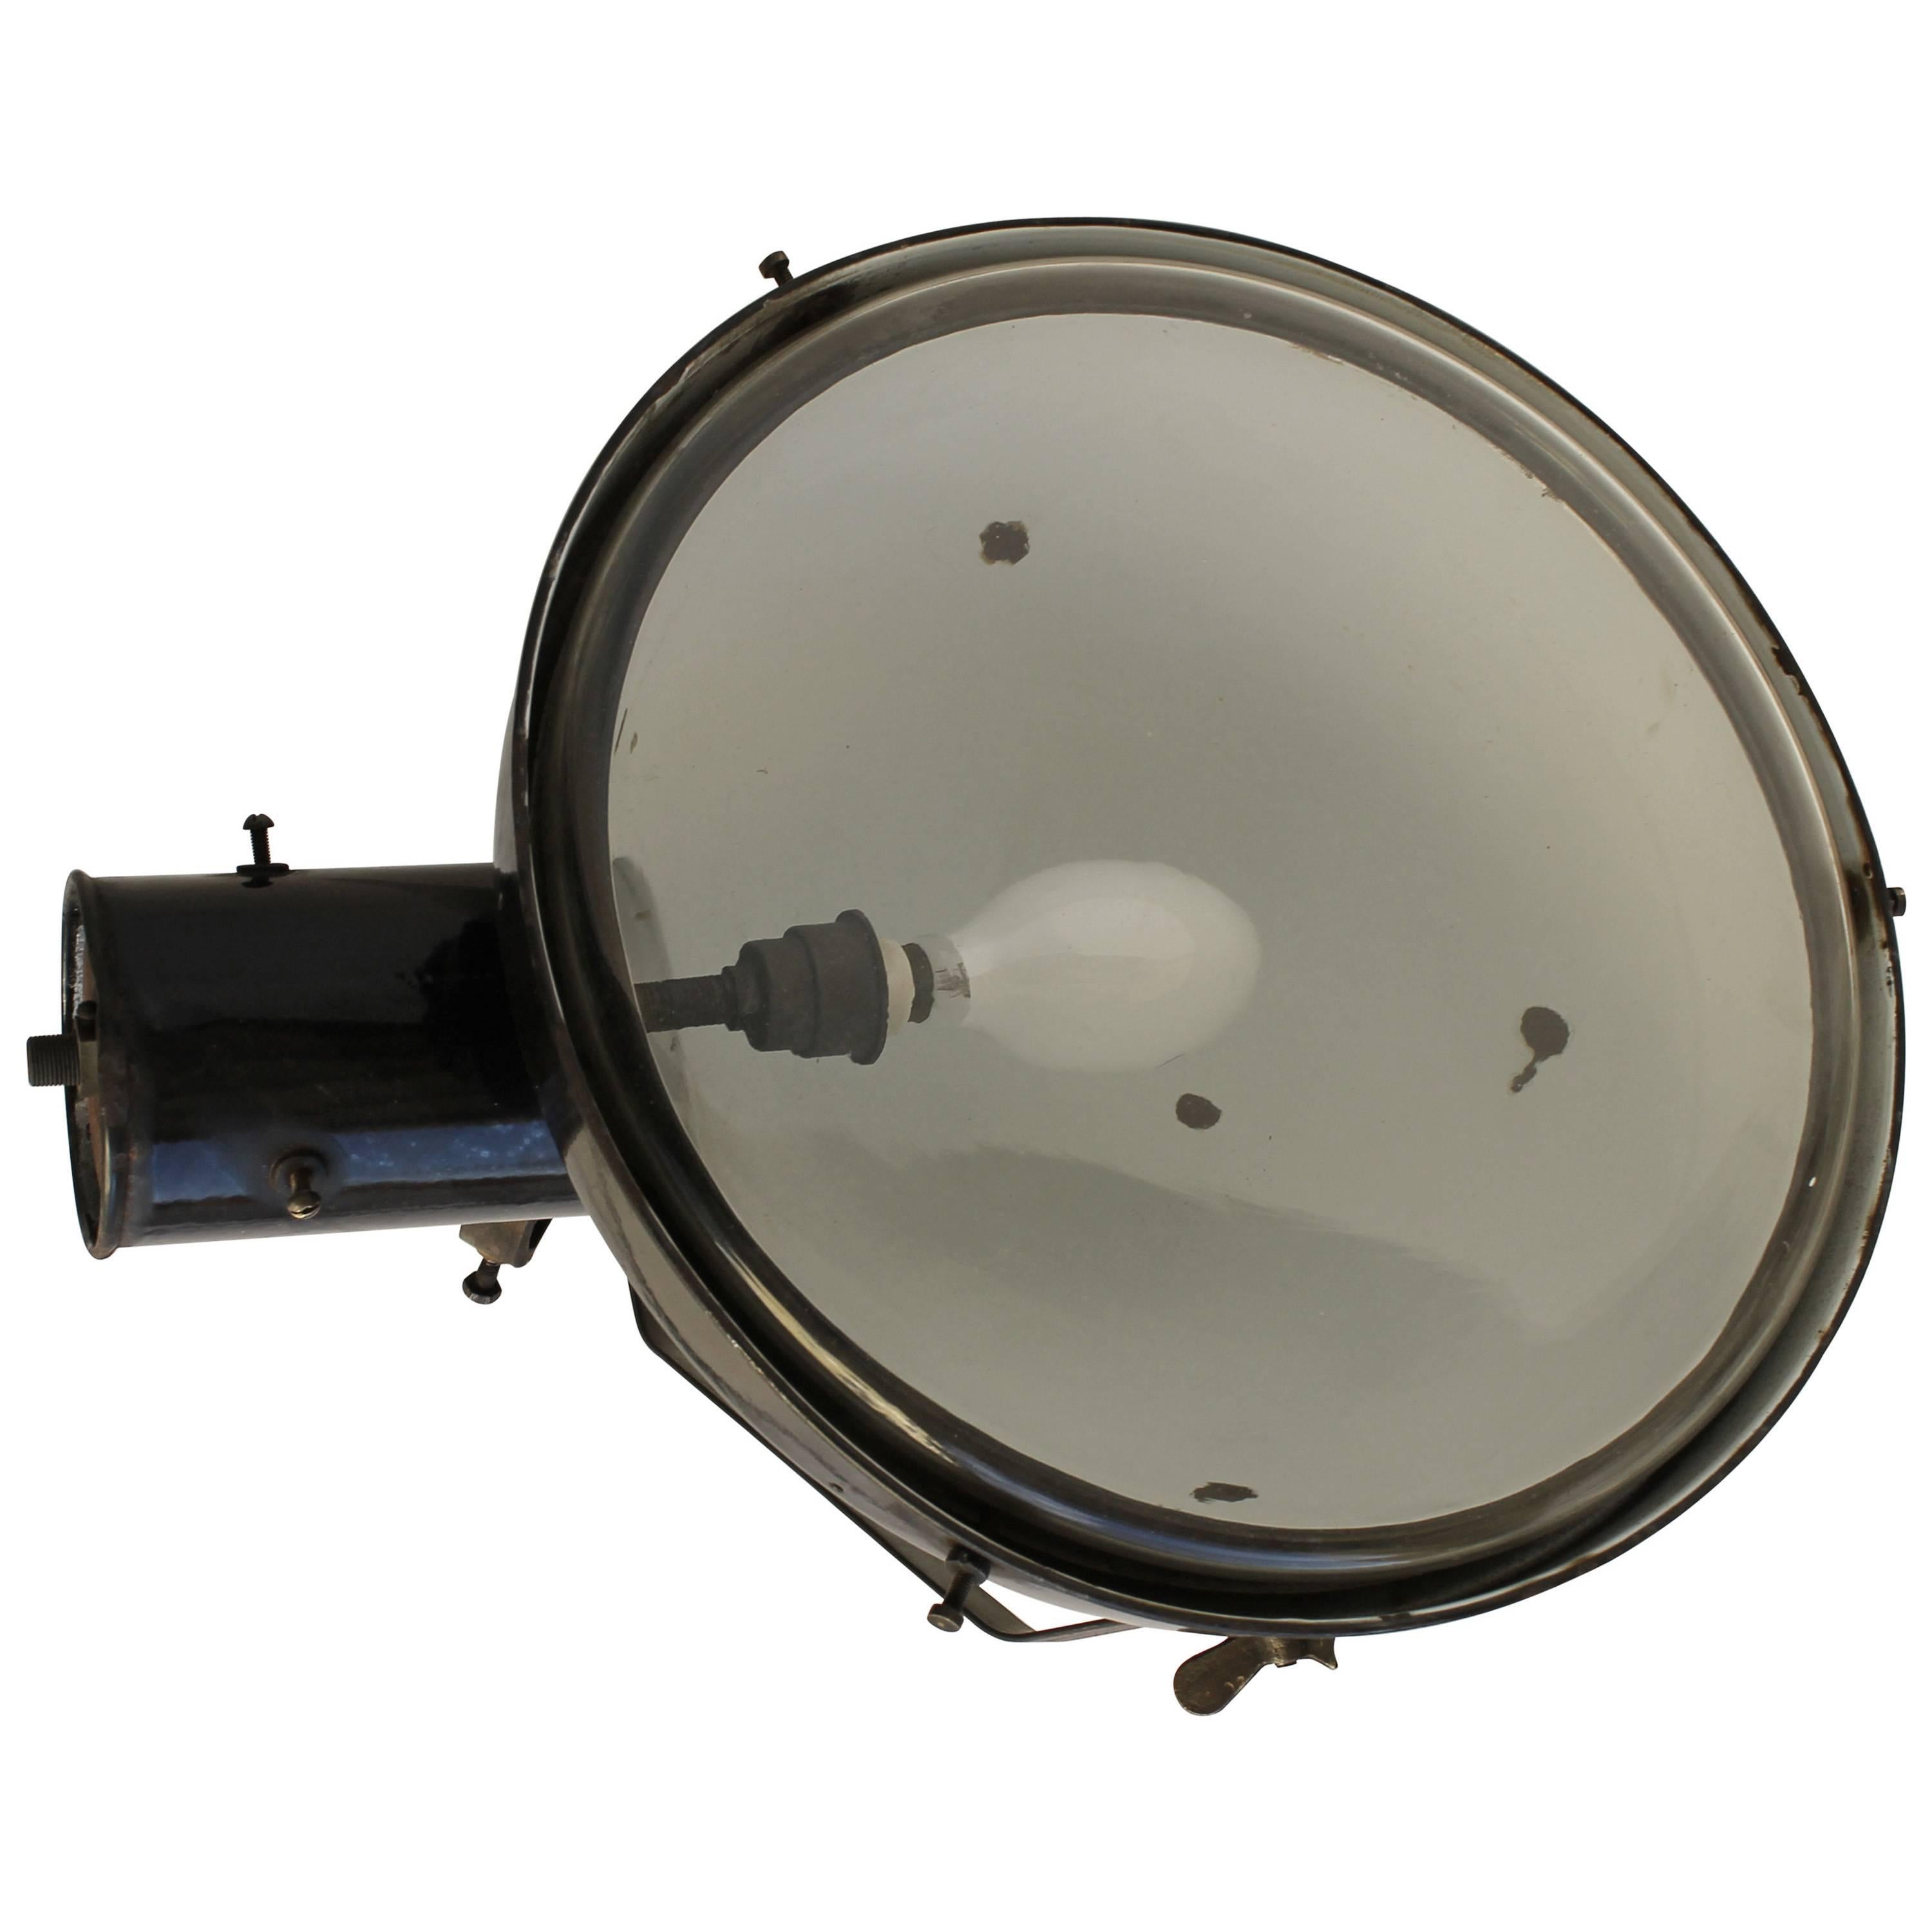 Vintage Industrial Big Spotlight Lamp